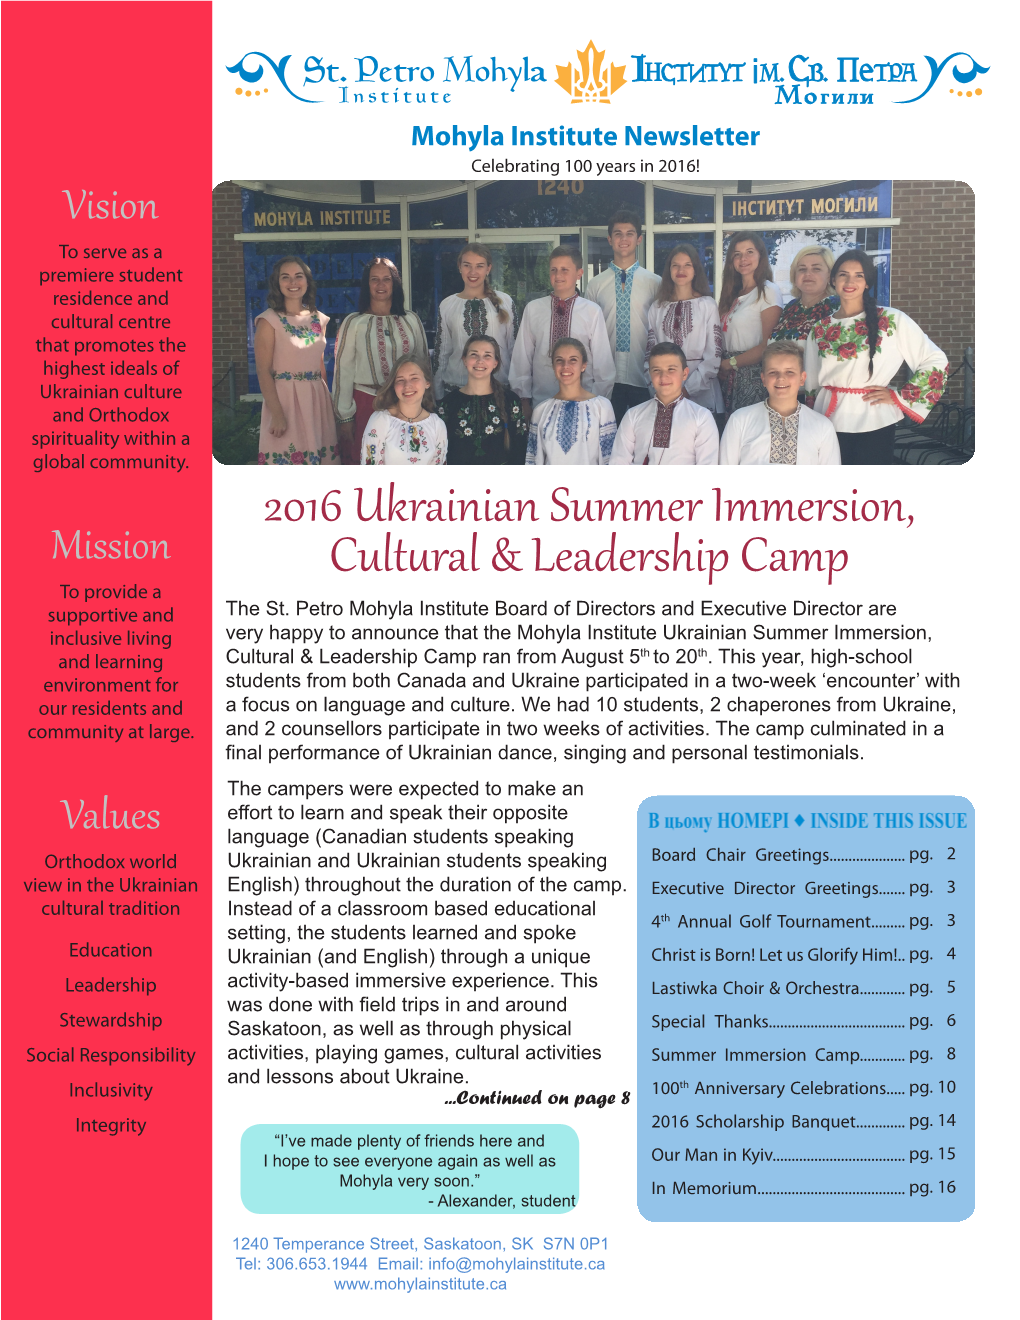 2016 Ukrainian Summer Immersion, Cultural & Leadership Camp